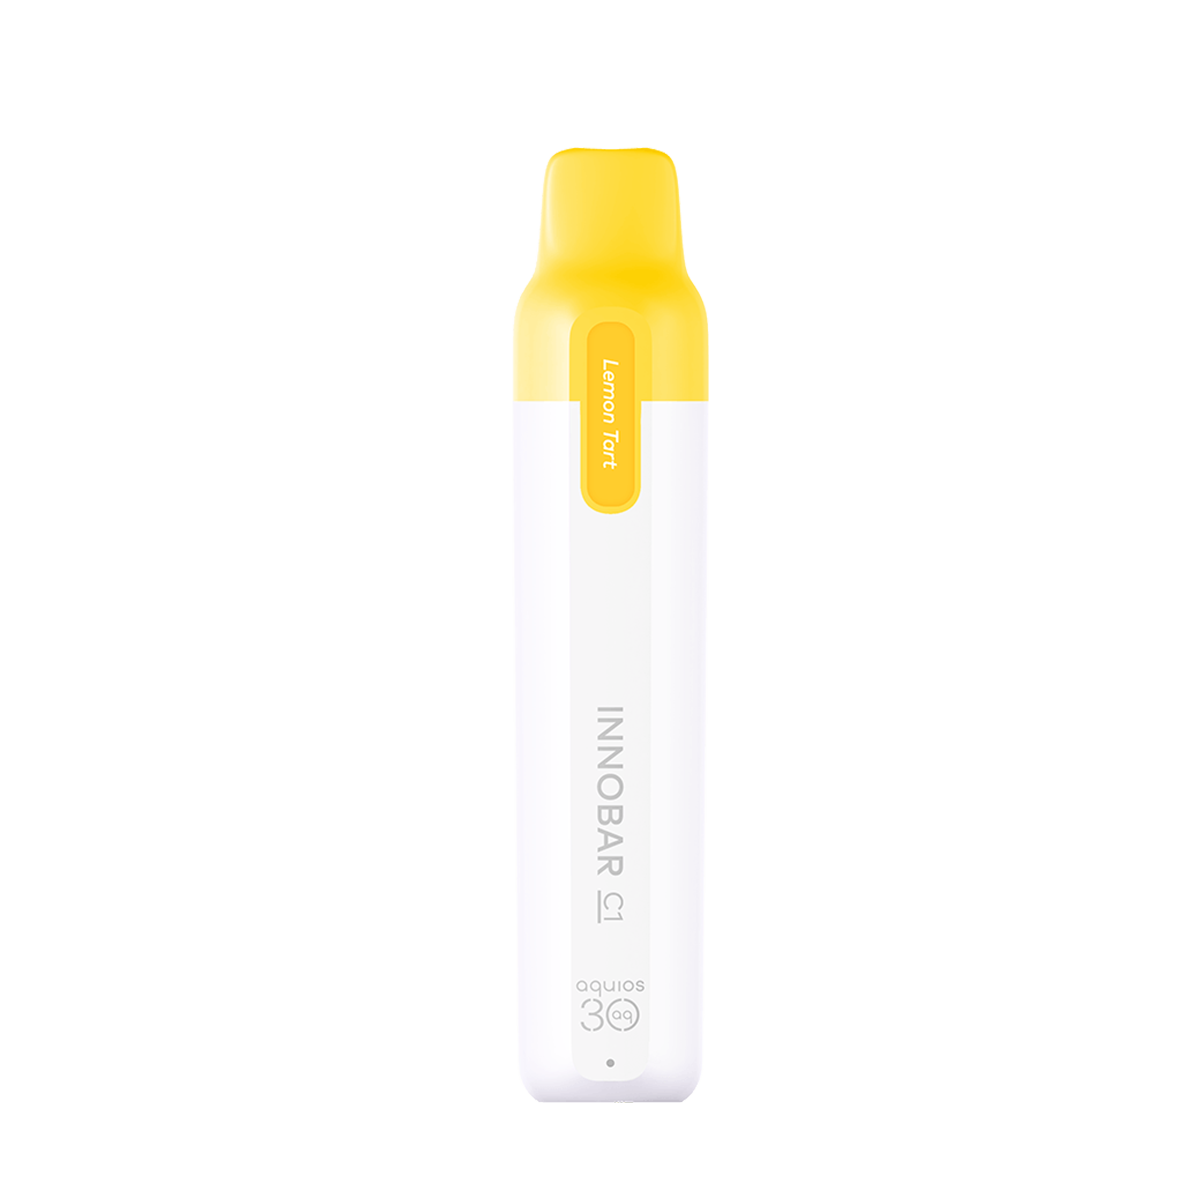 InnoBar C1 Disposable Vape White Yellow 